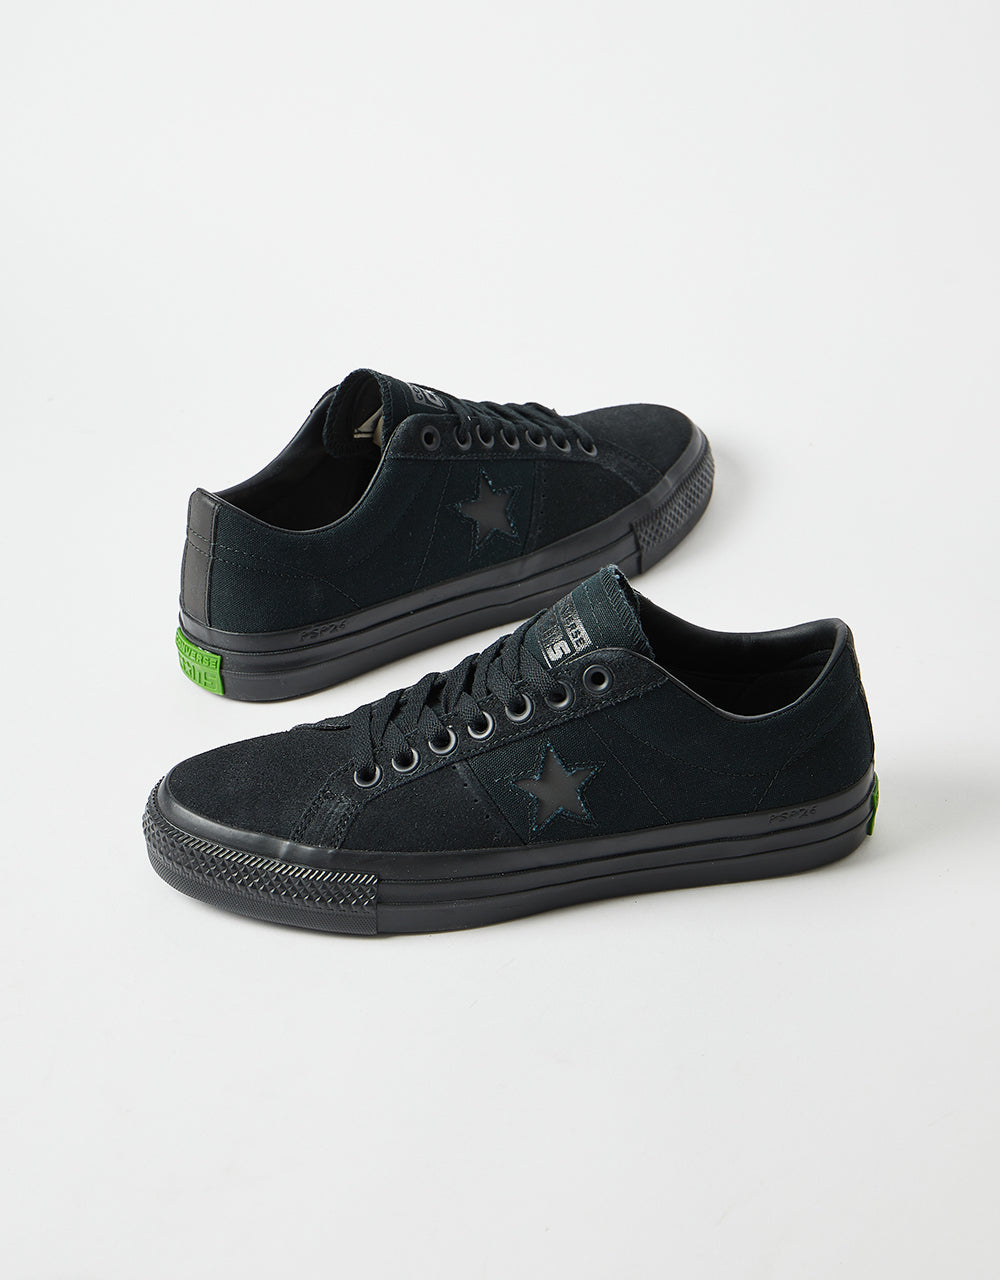 Converse x Sean Greene One Star Pro Skate Shoes - Black/Black/SAP Green